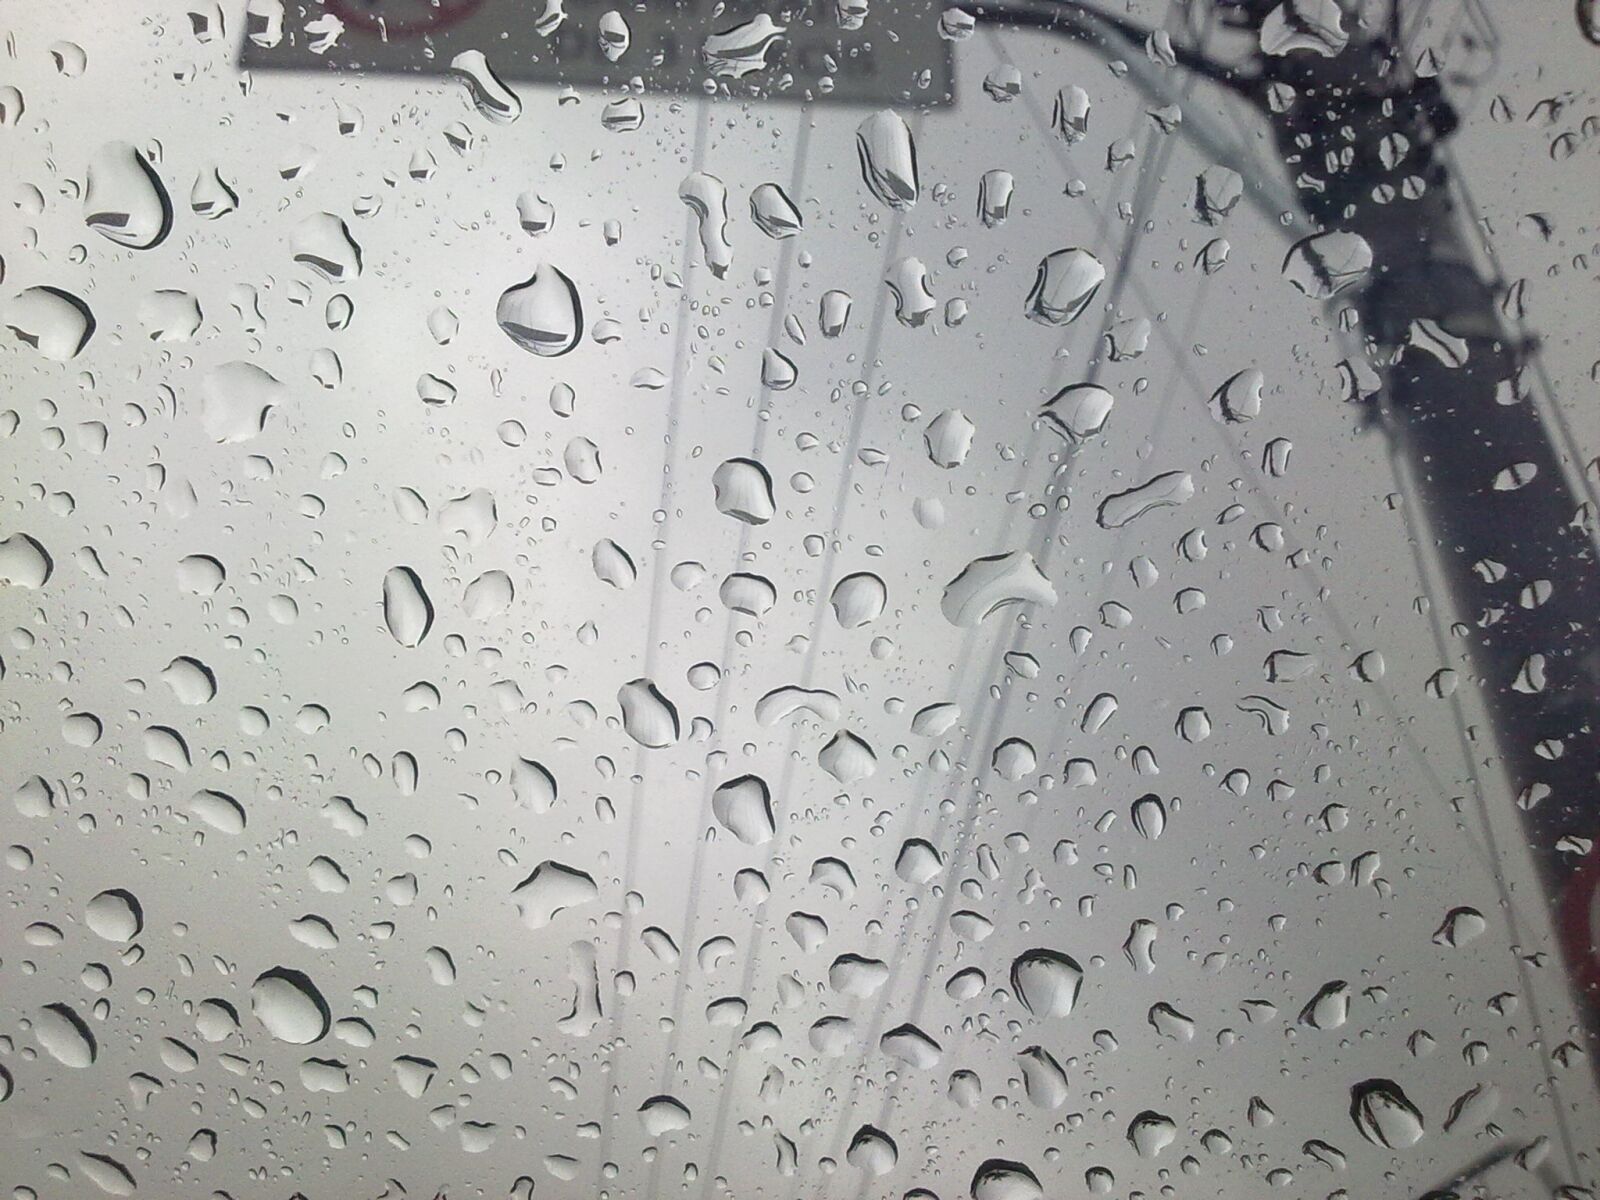 Nokia 5530 sample photo. Rain, drops, liquid photography